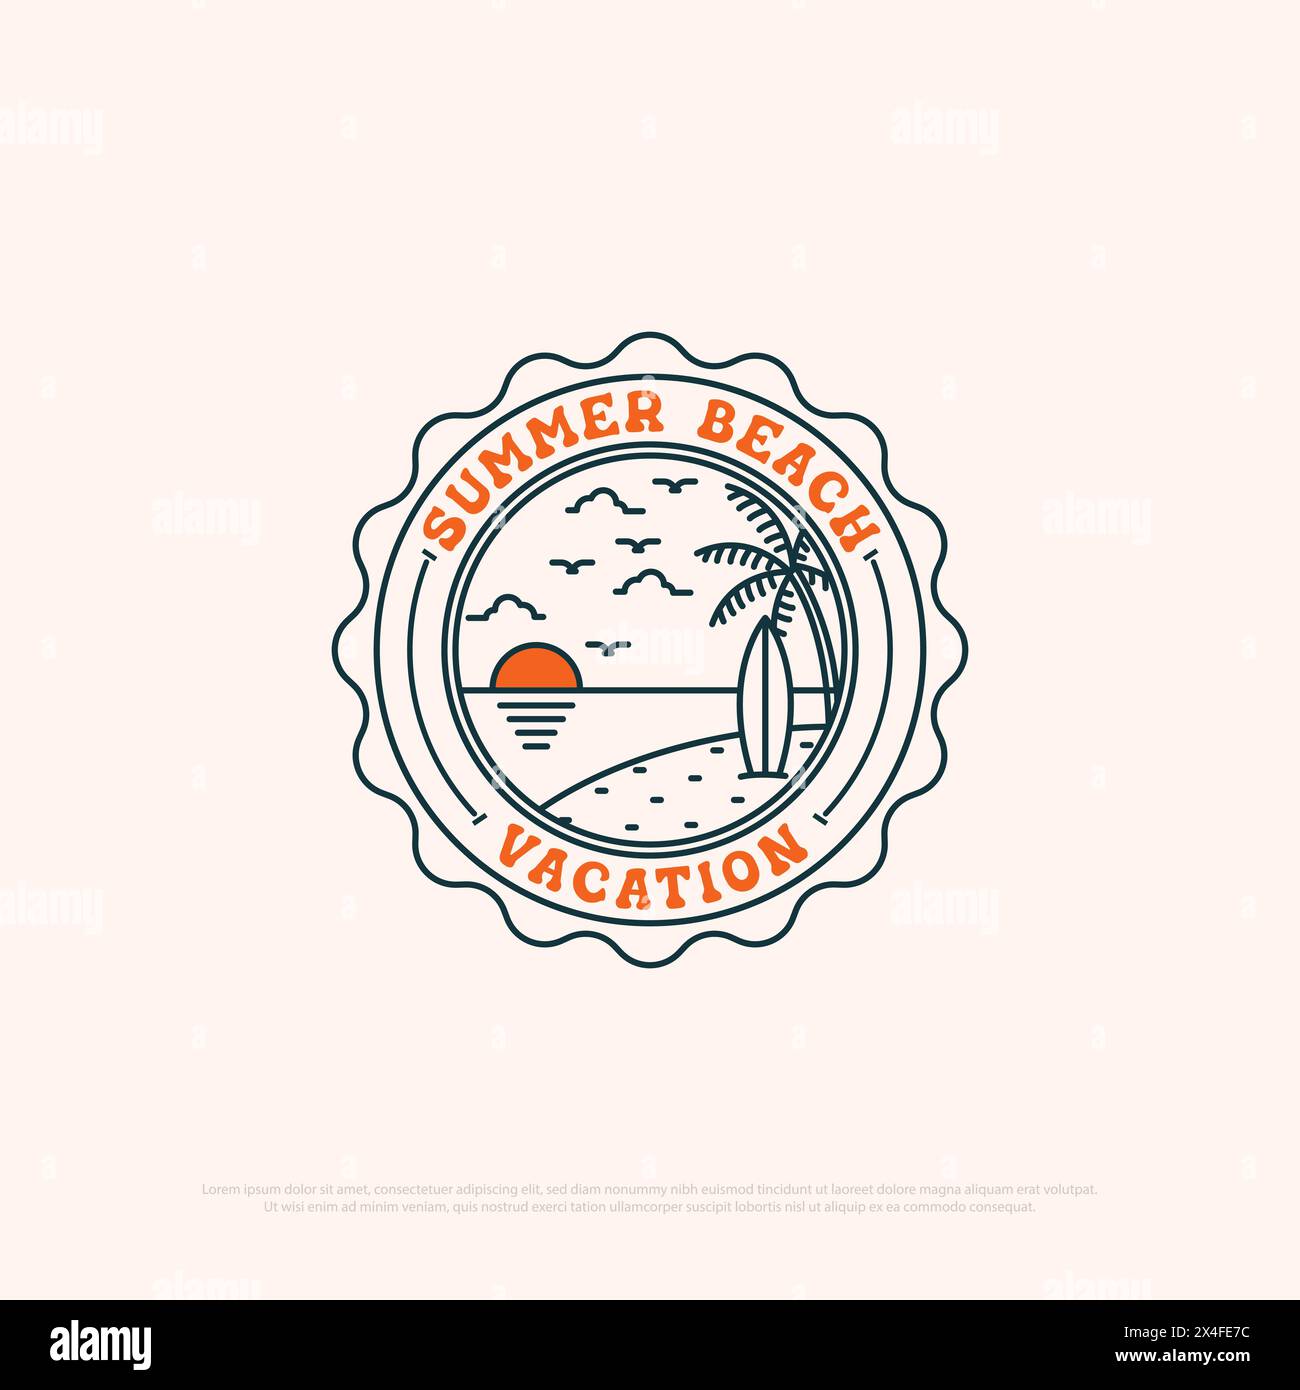 Summer vacation logo badge with line art simple vector minimalist illustration template, travel agency logo designs Stock Vector